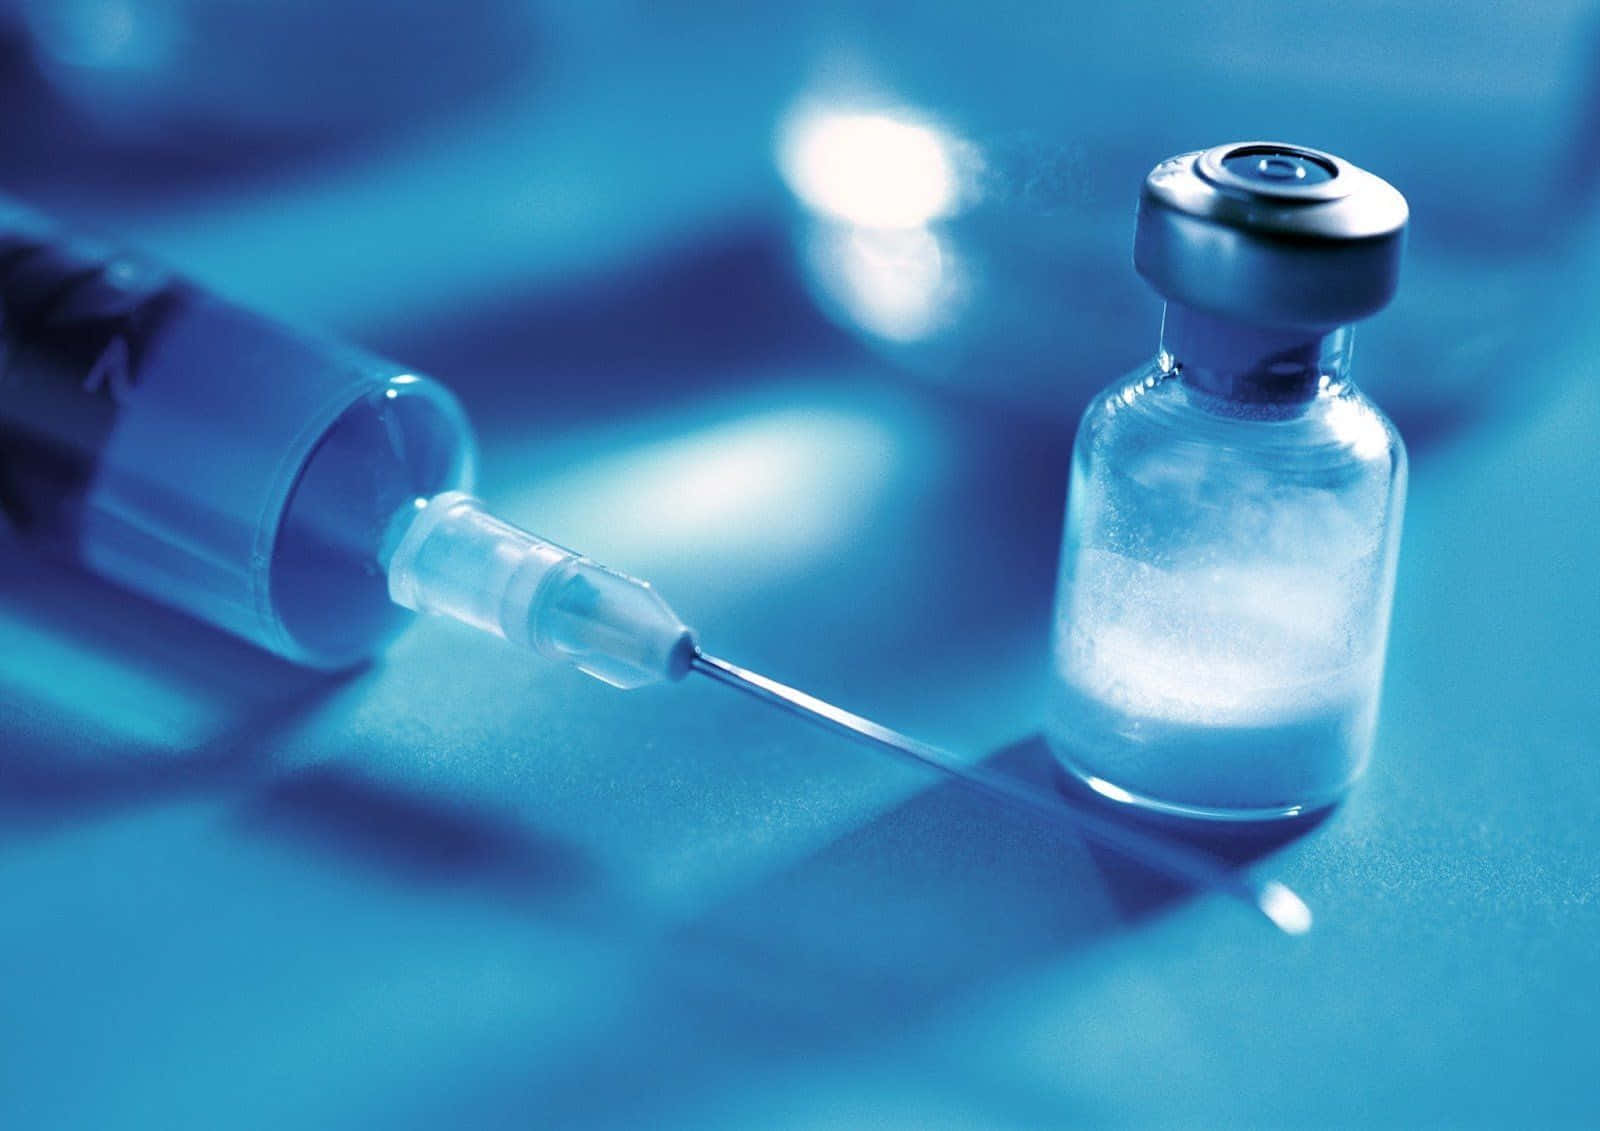 High-definition Image Of Medical Syringe And Tiny Bottle